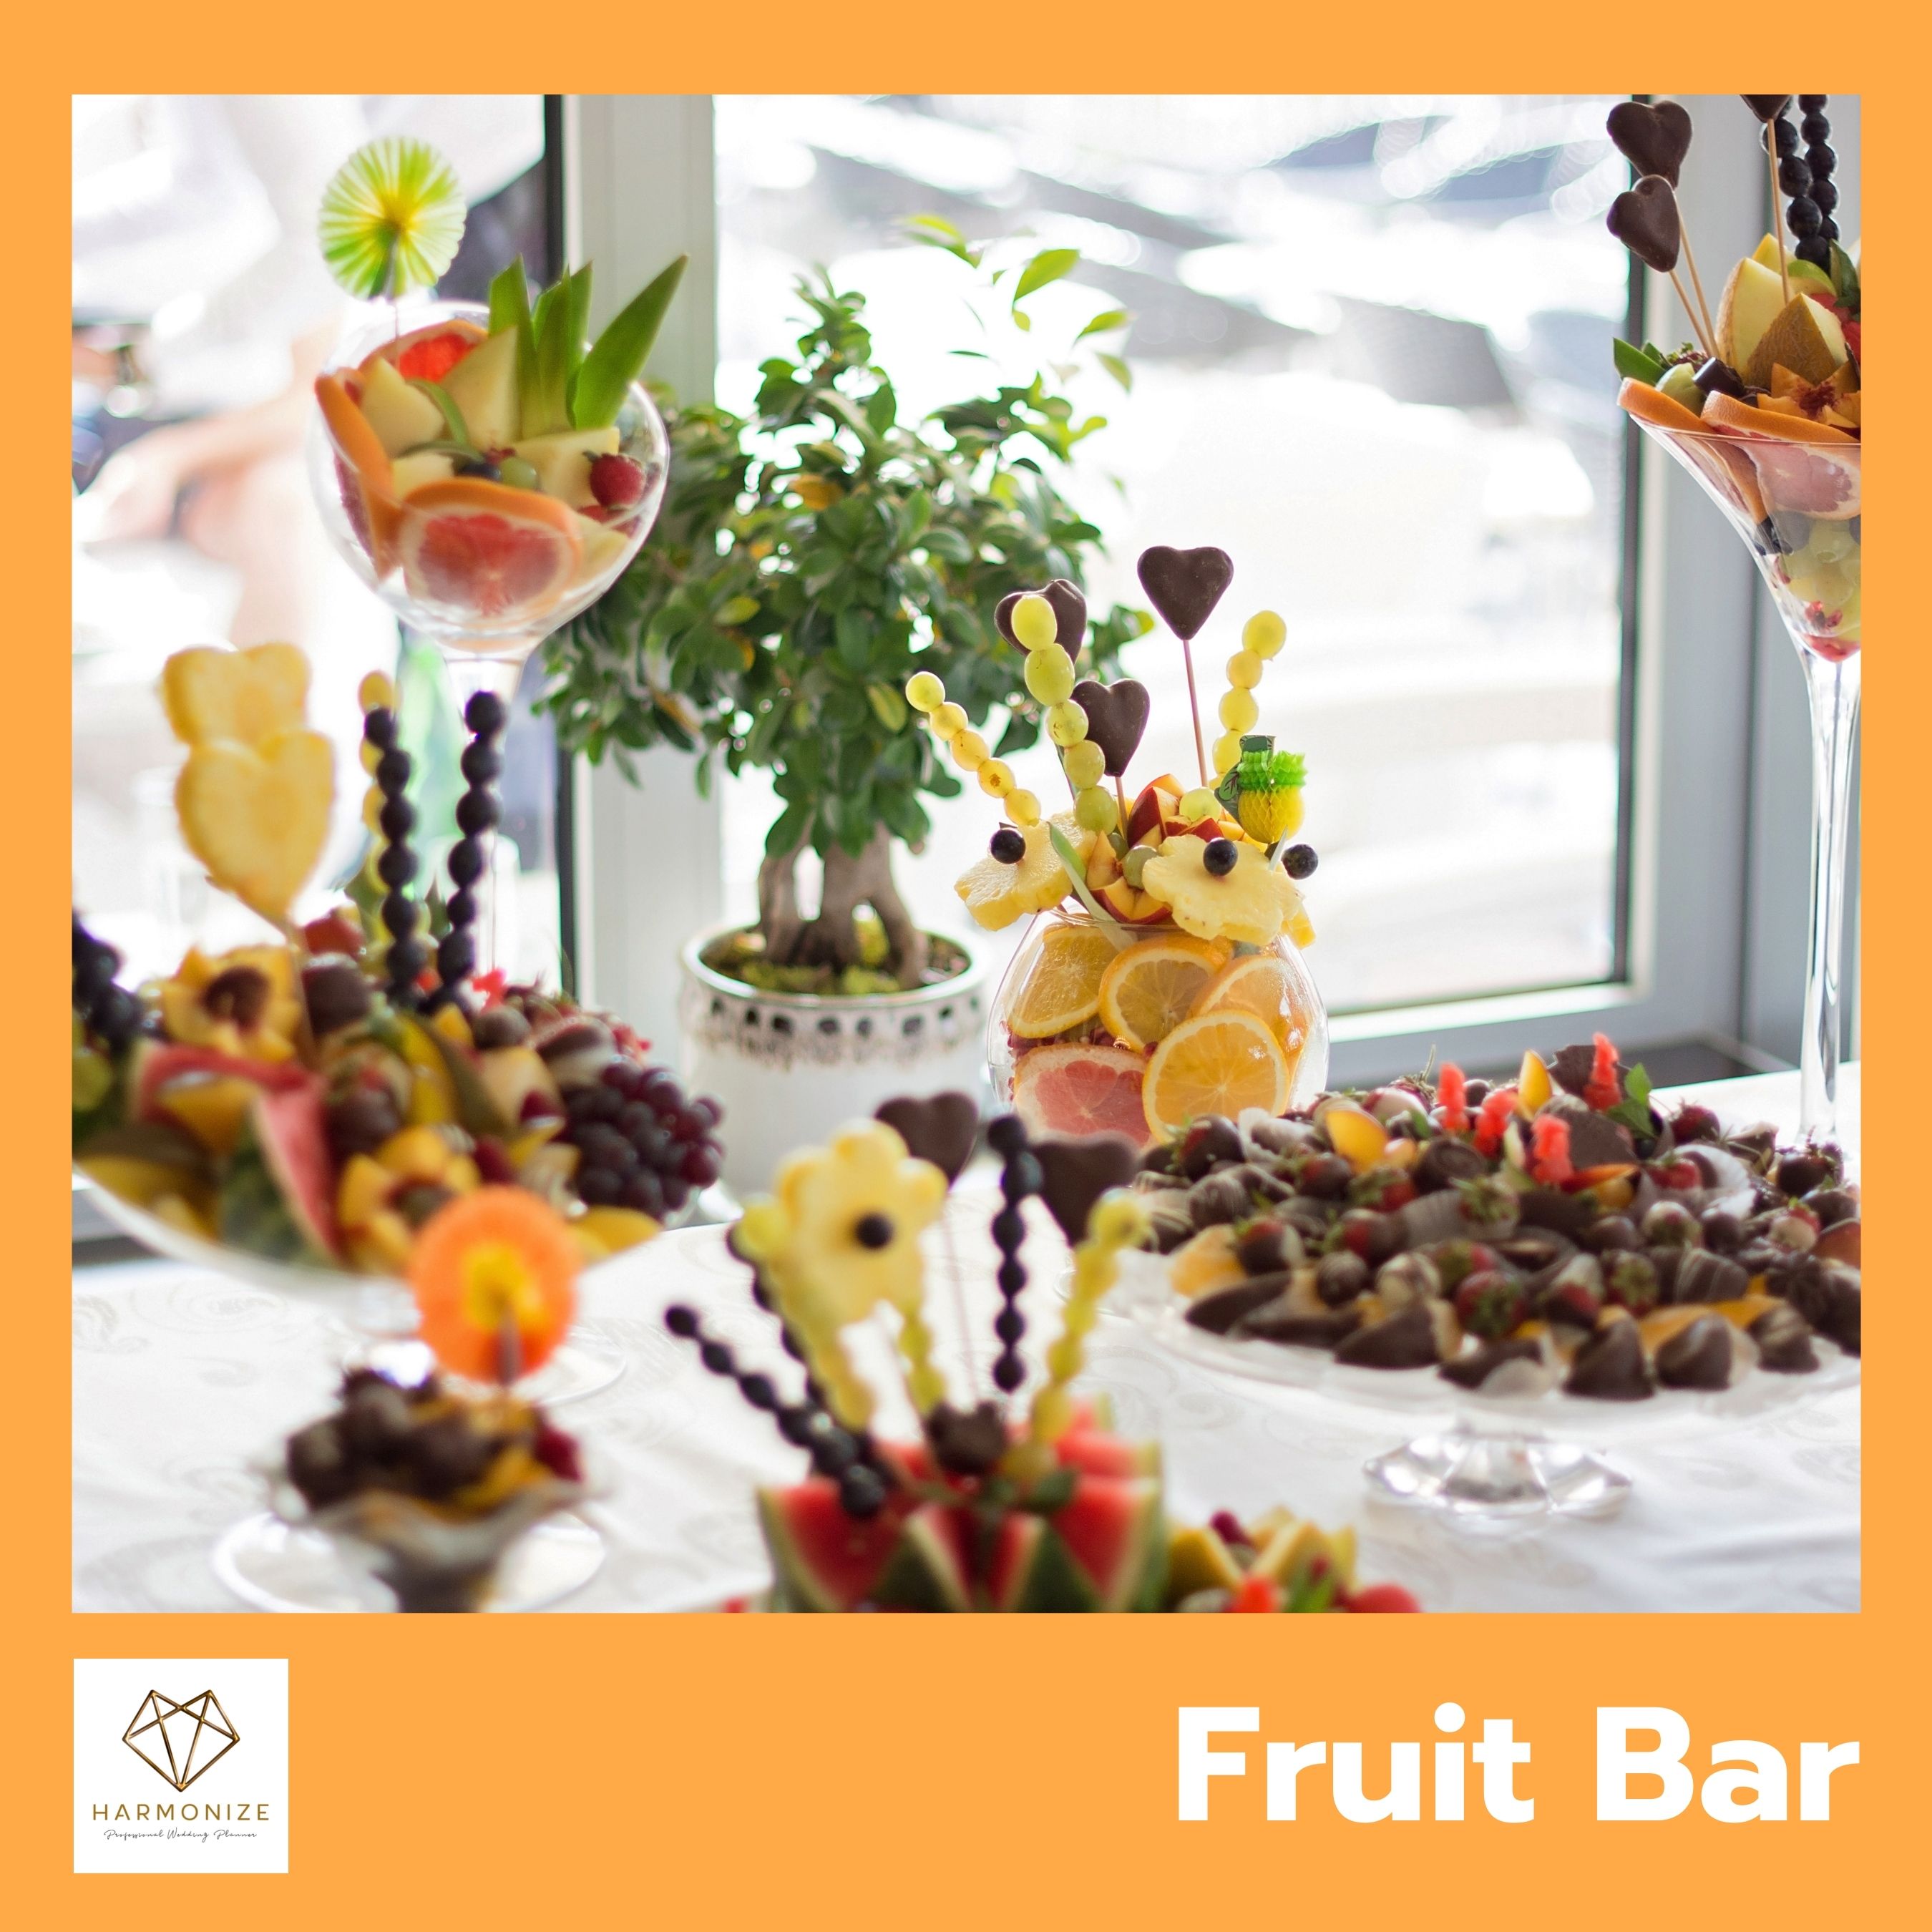 Fruit Bar - ไอเดียสุดเก๋ สำหรับ "อาหาร" Wedding & Party